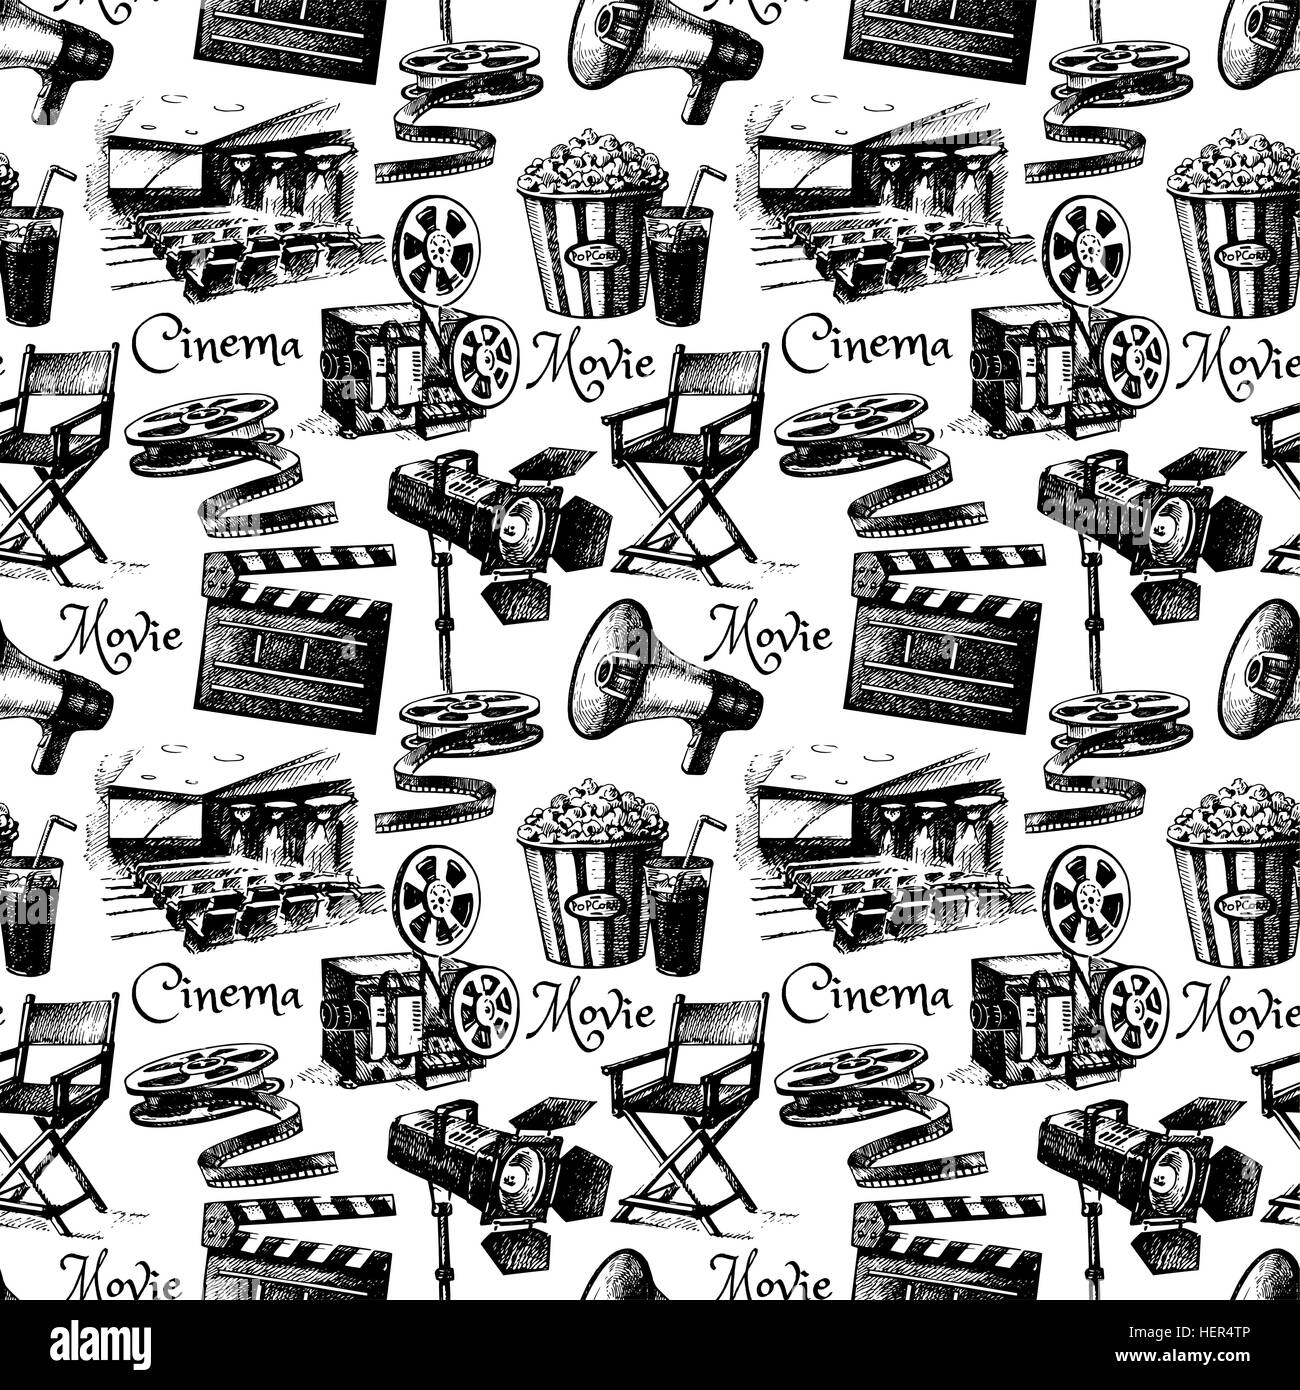 Sketch Cinema Hall Stock Illustrations  82 Sketch Cinema Hall Stock  Illustrations Vectors  Clipart  Dreamstime